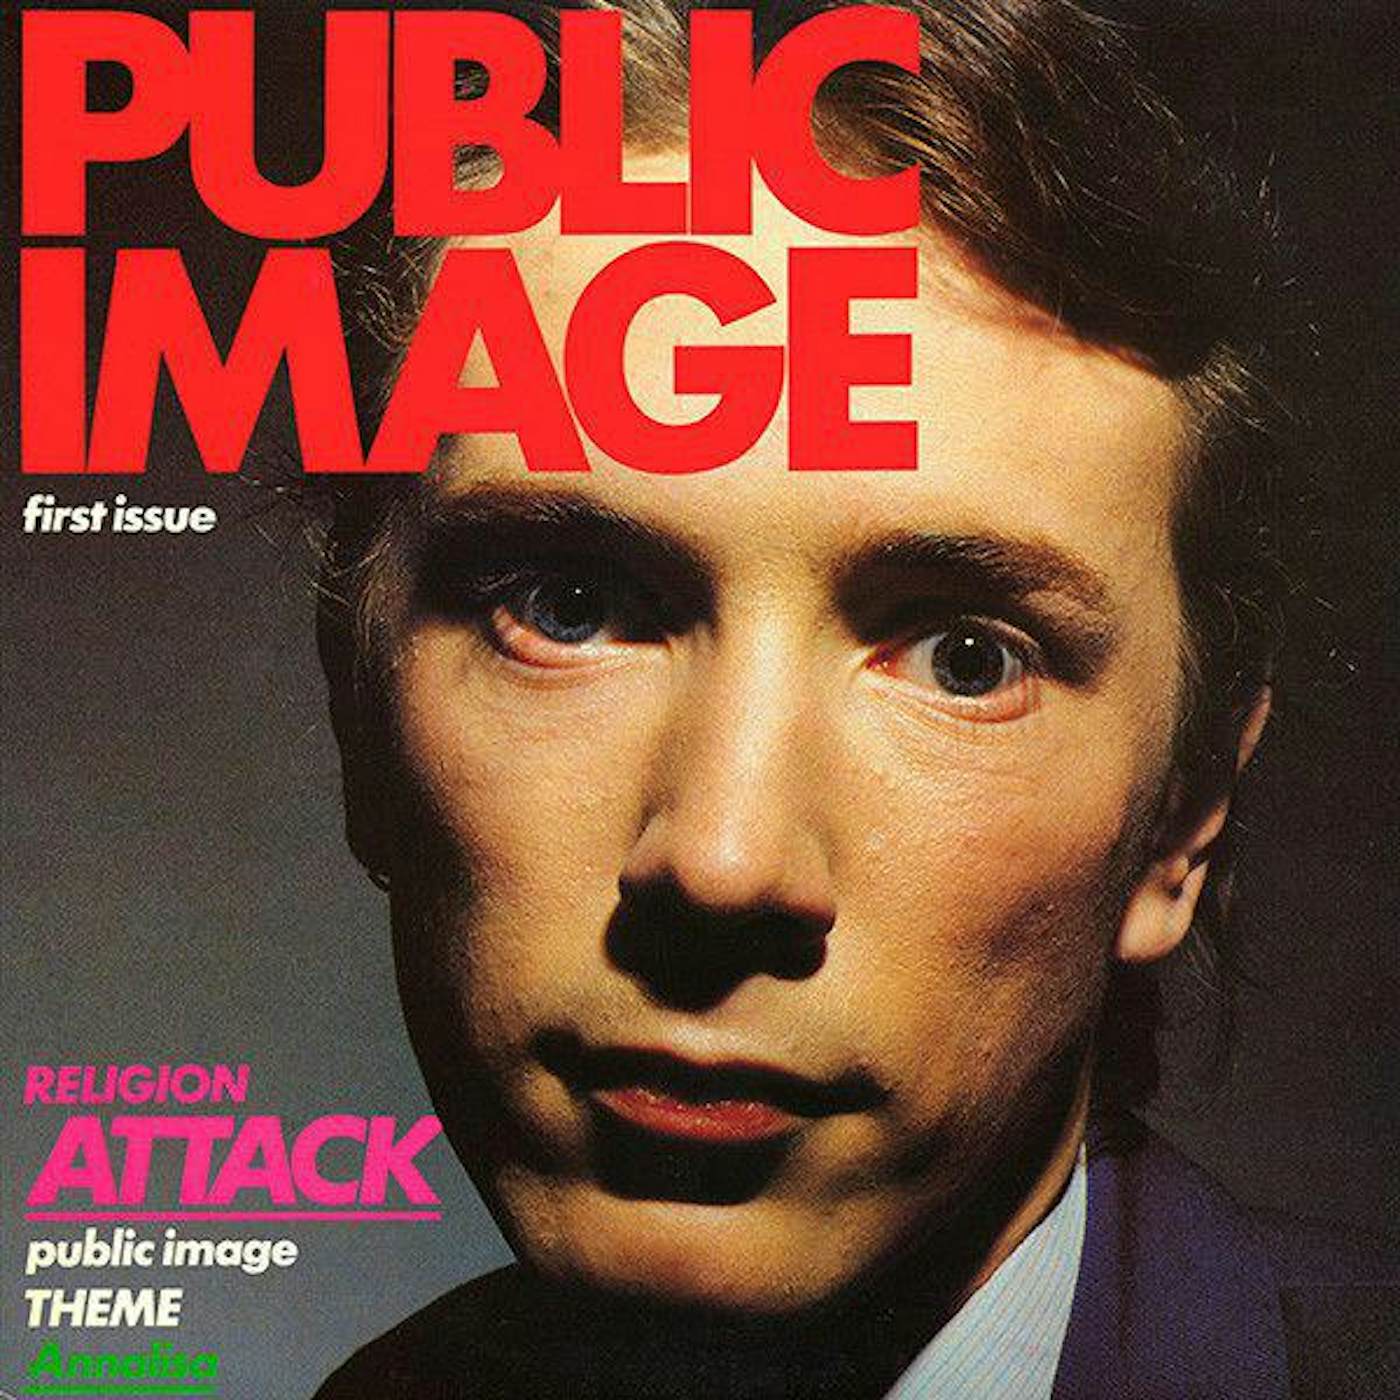 Public Image Ltd. CD